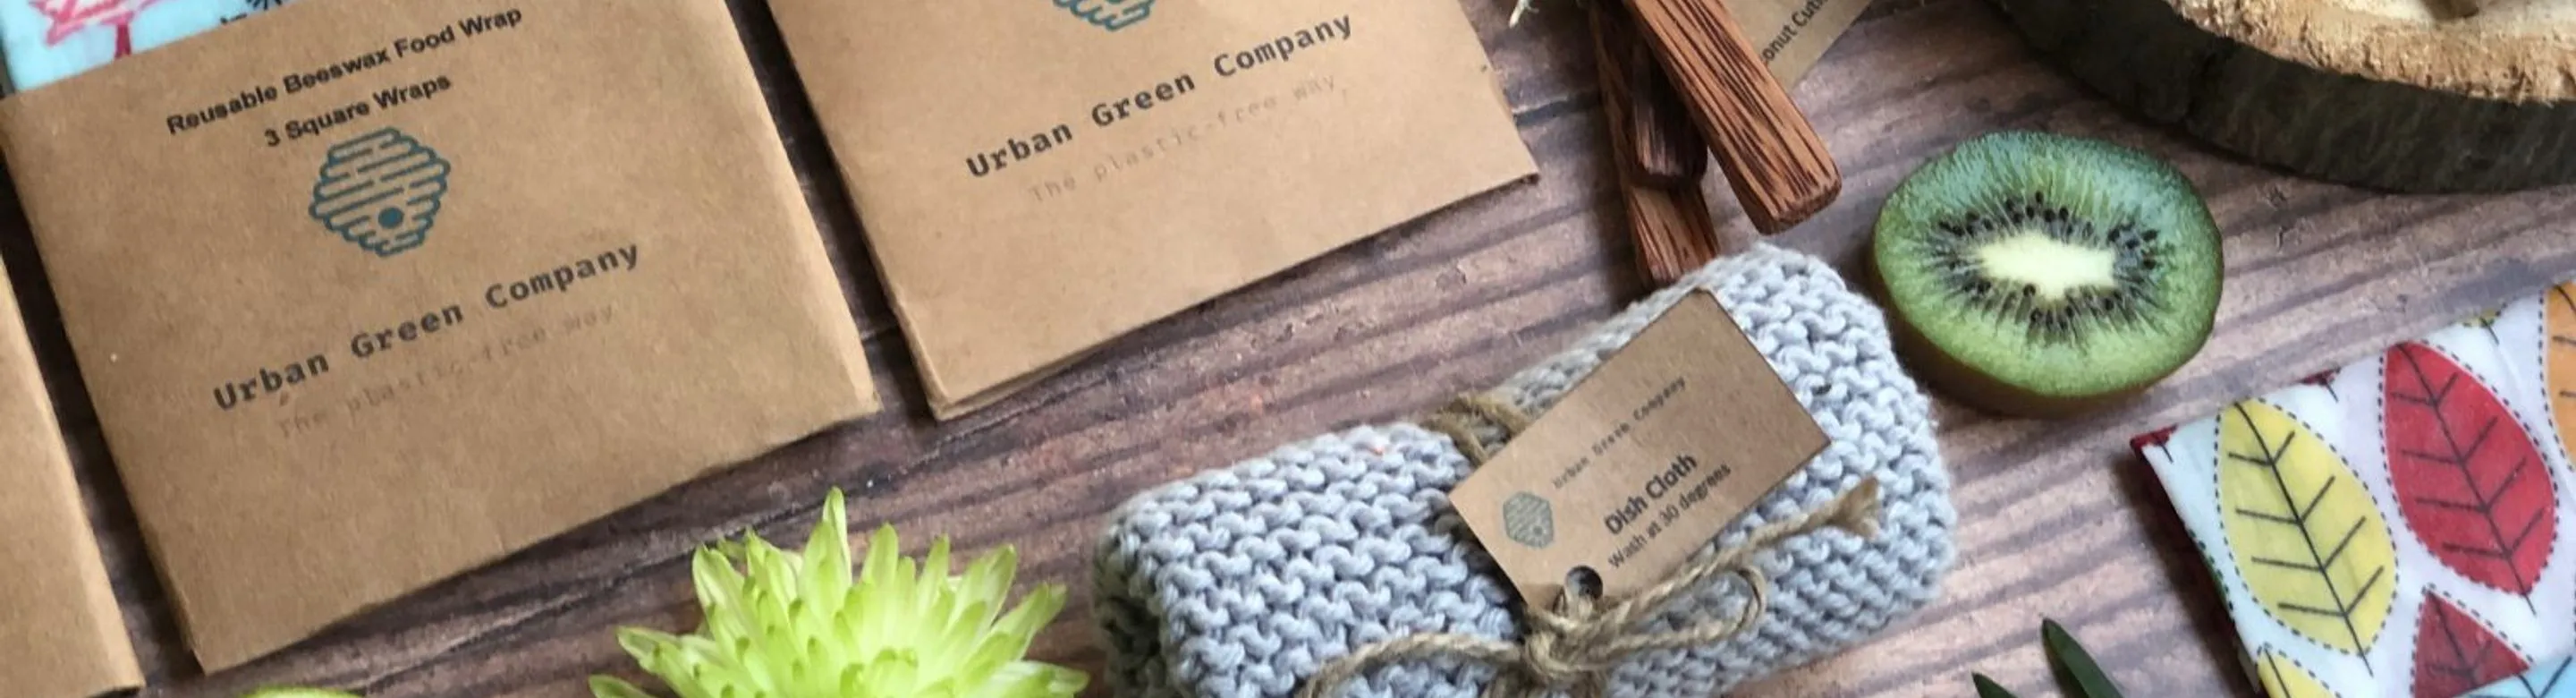 Urban Green Company